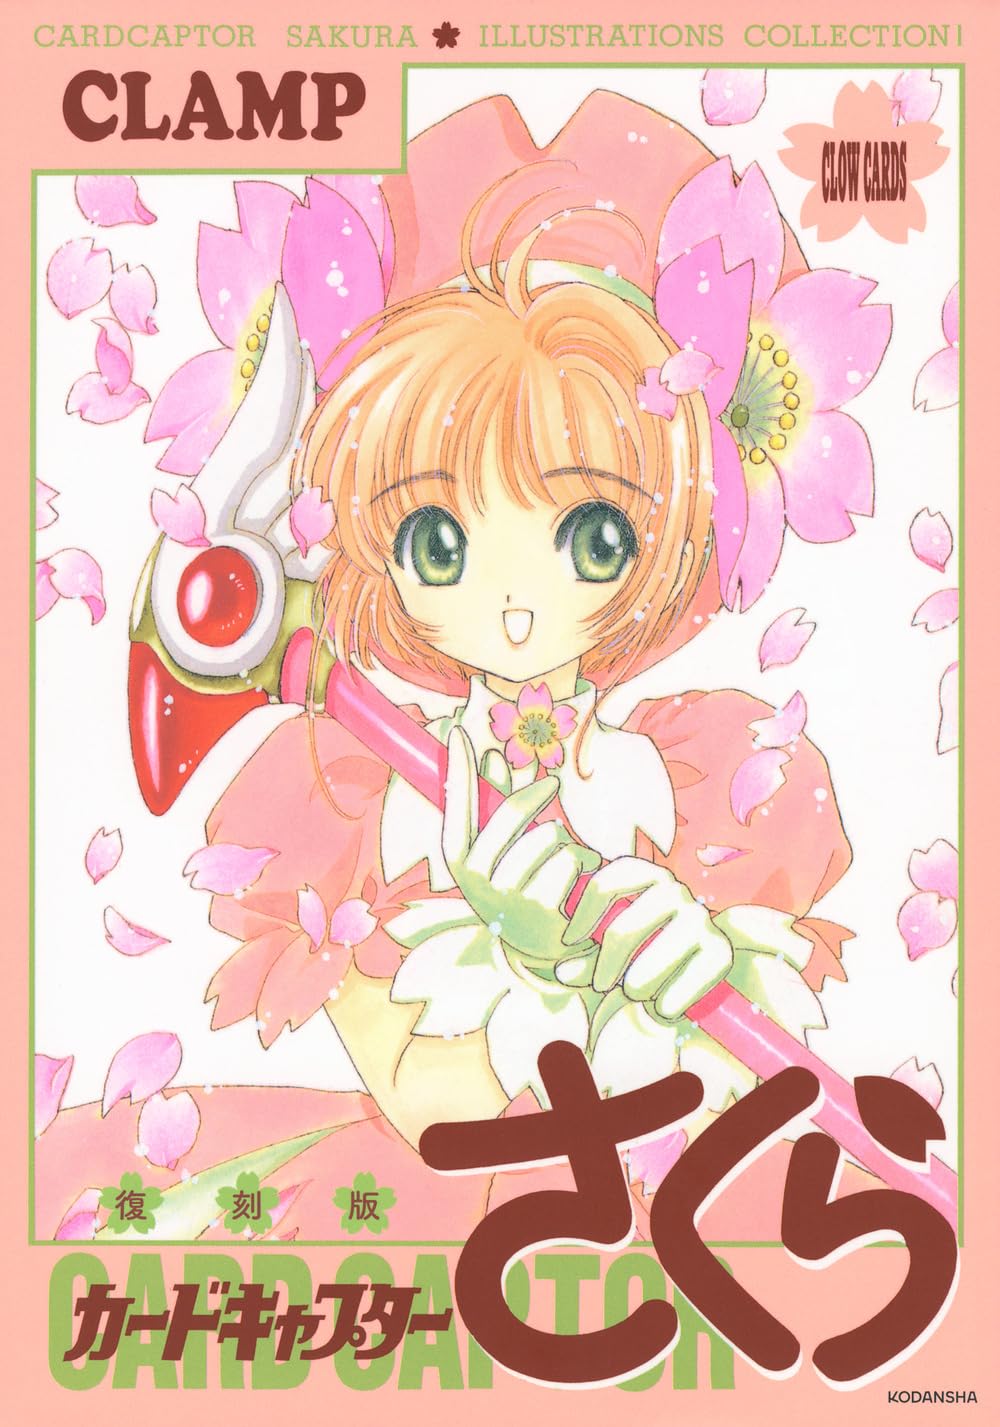 Cardcaptor Sakura Illustrations Collection Vol.1 Reprint edition